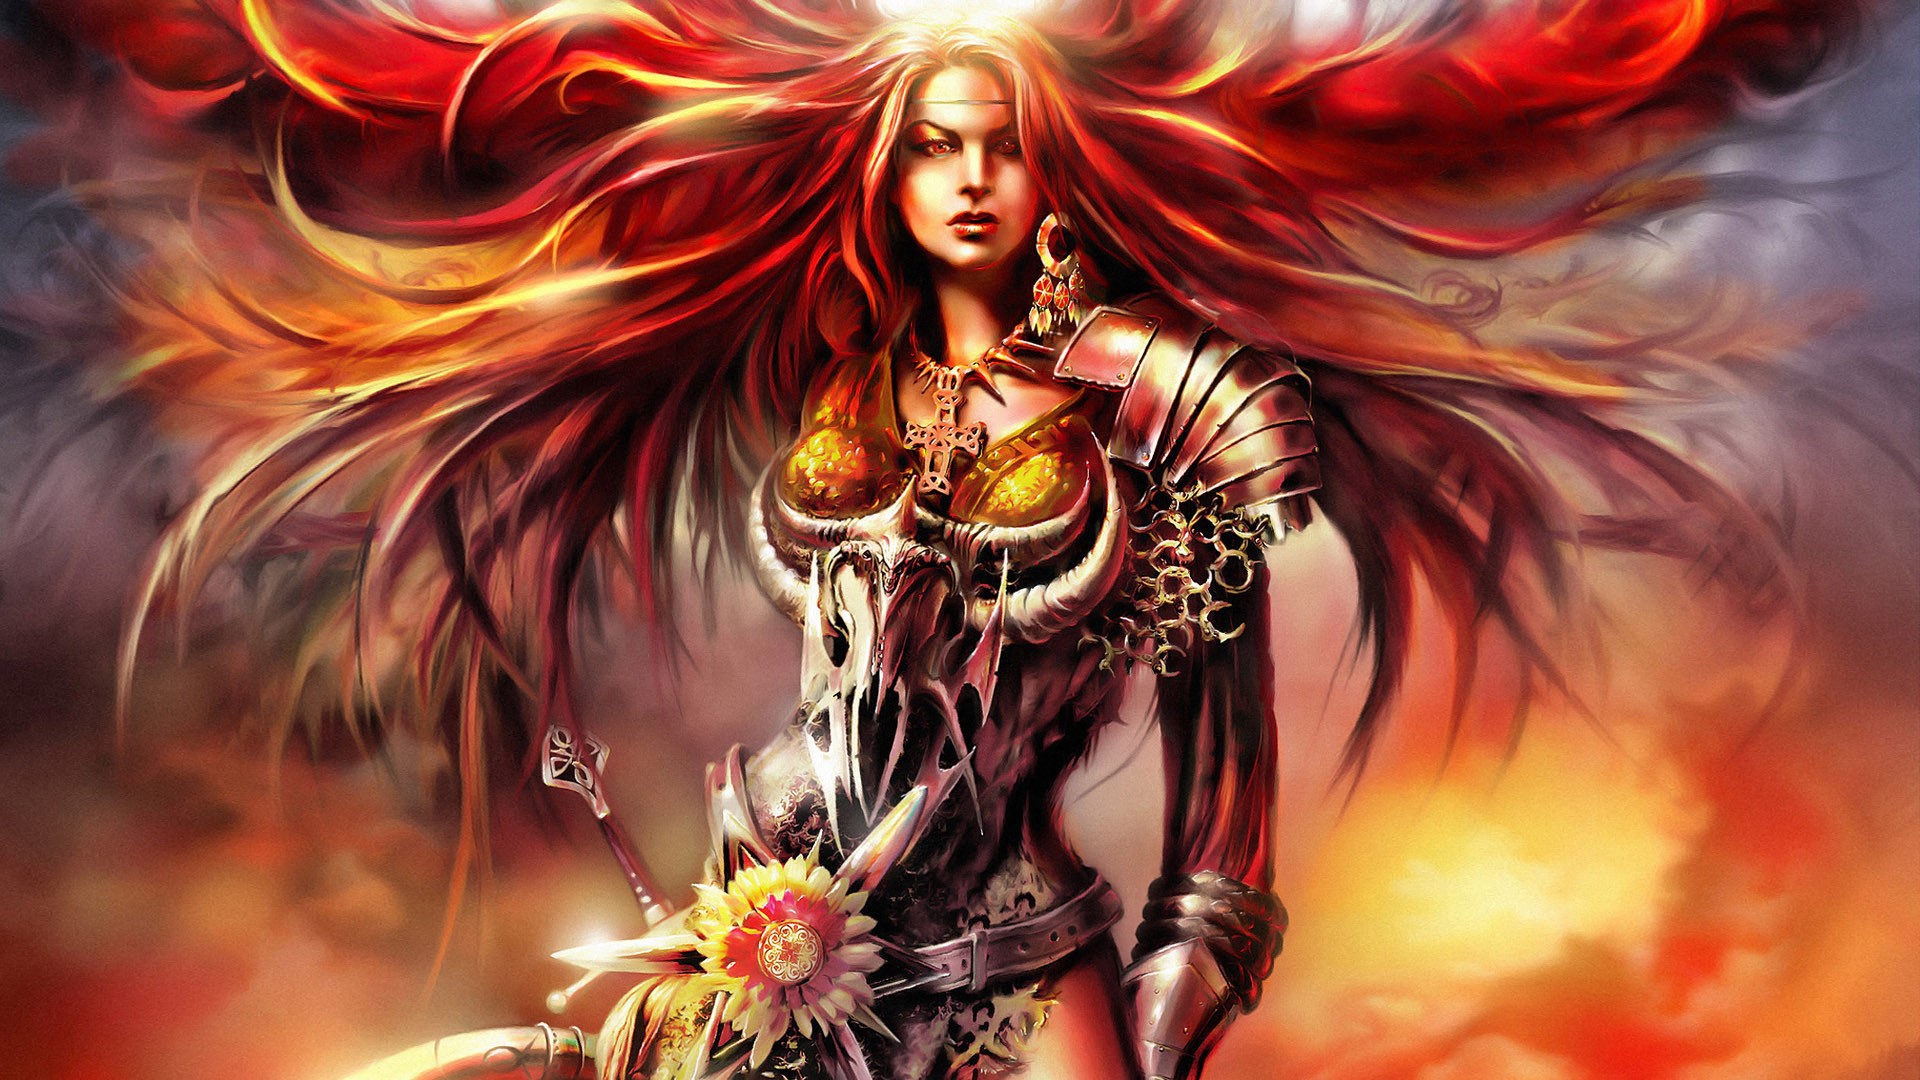 General 1920x1080 fantasy girl redhead long hair armored women fantasy armor red eyes looking at viewer